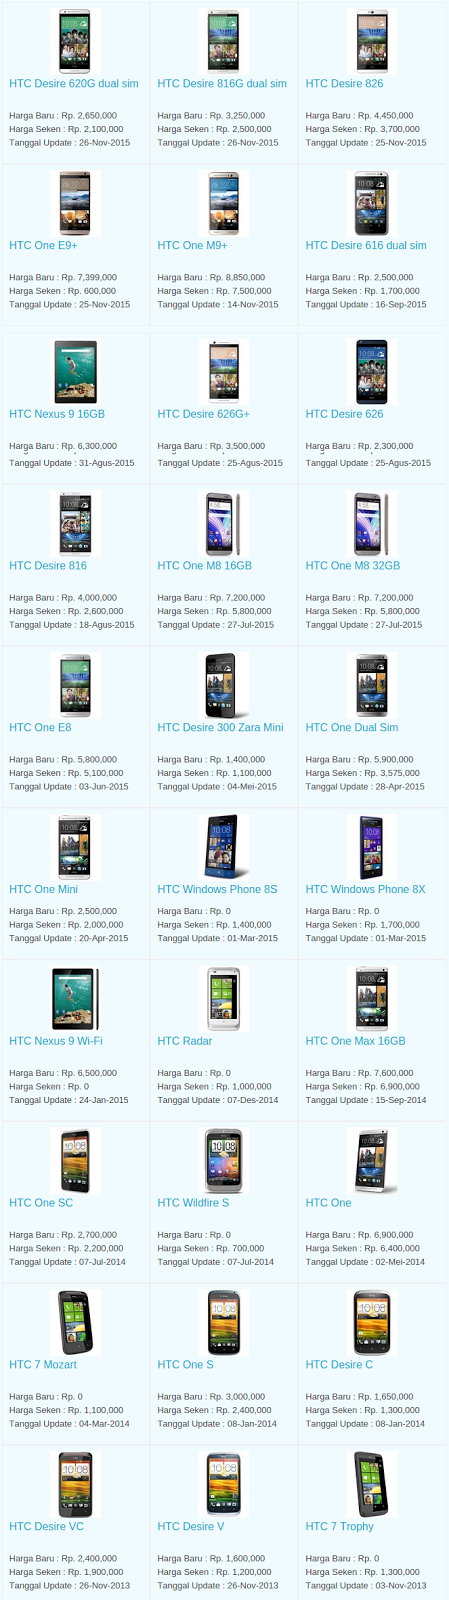 Daftar Harga Hp HTC Desember 2015